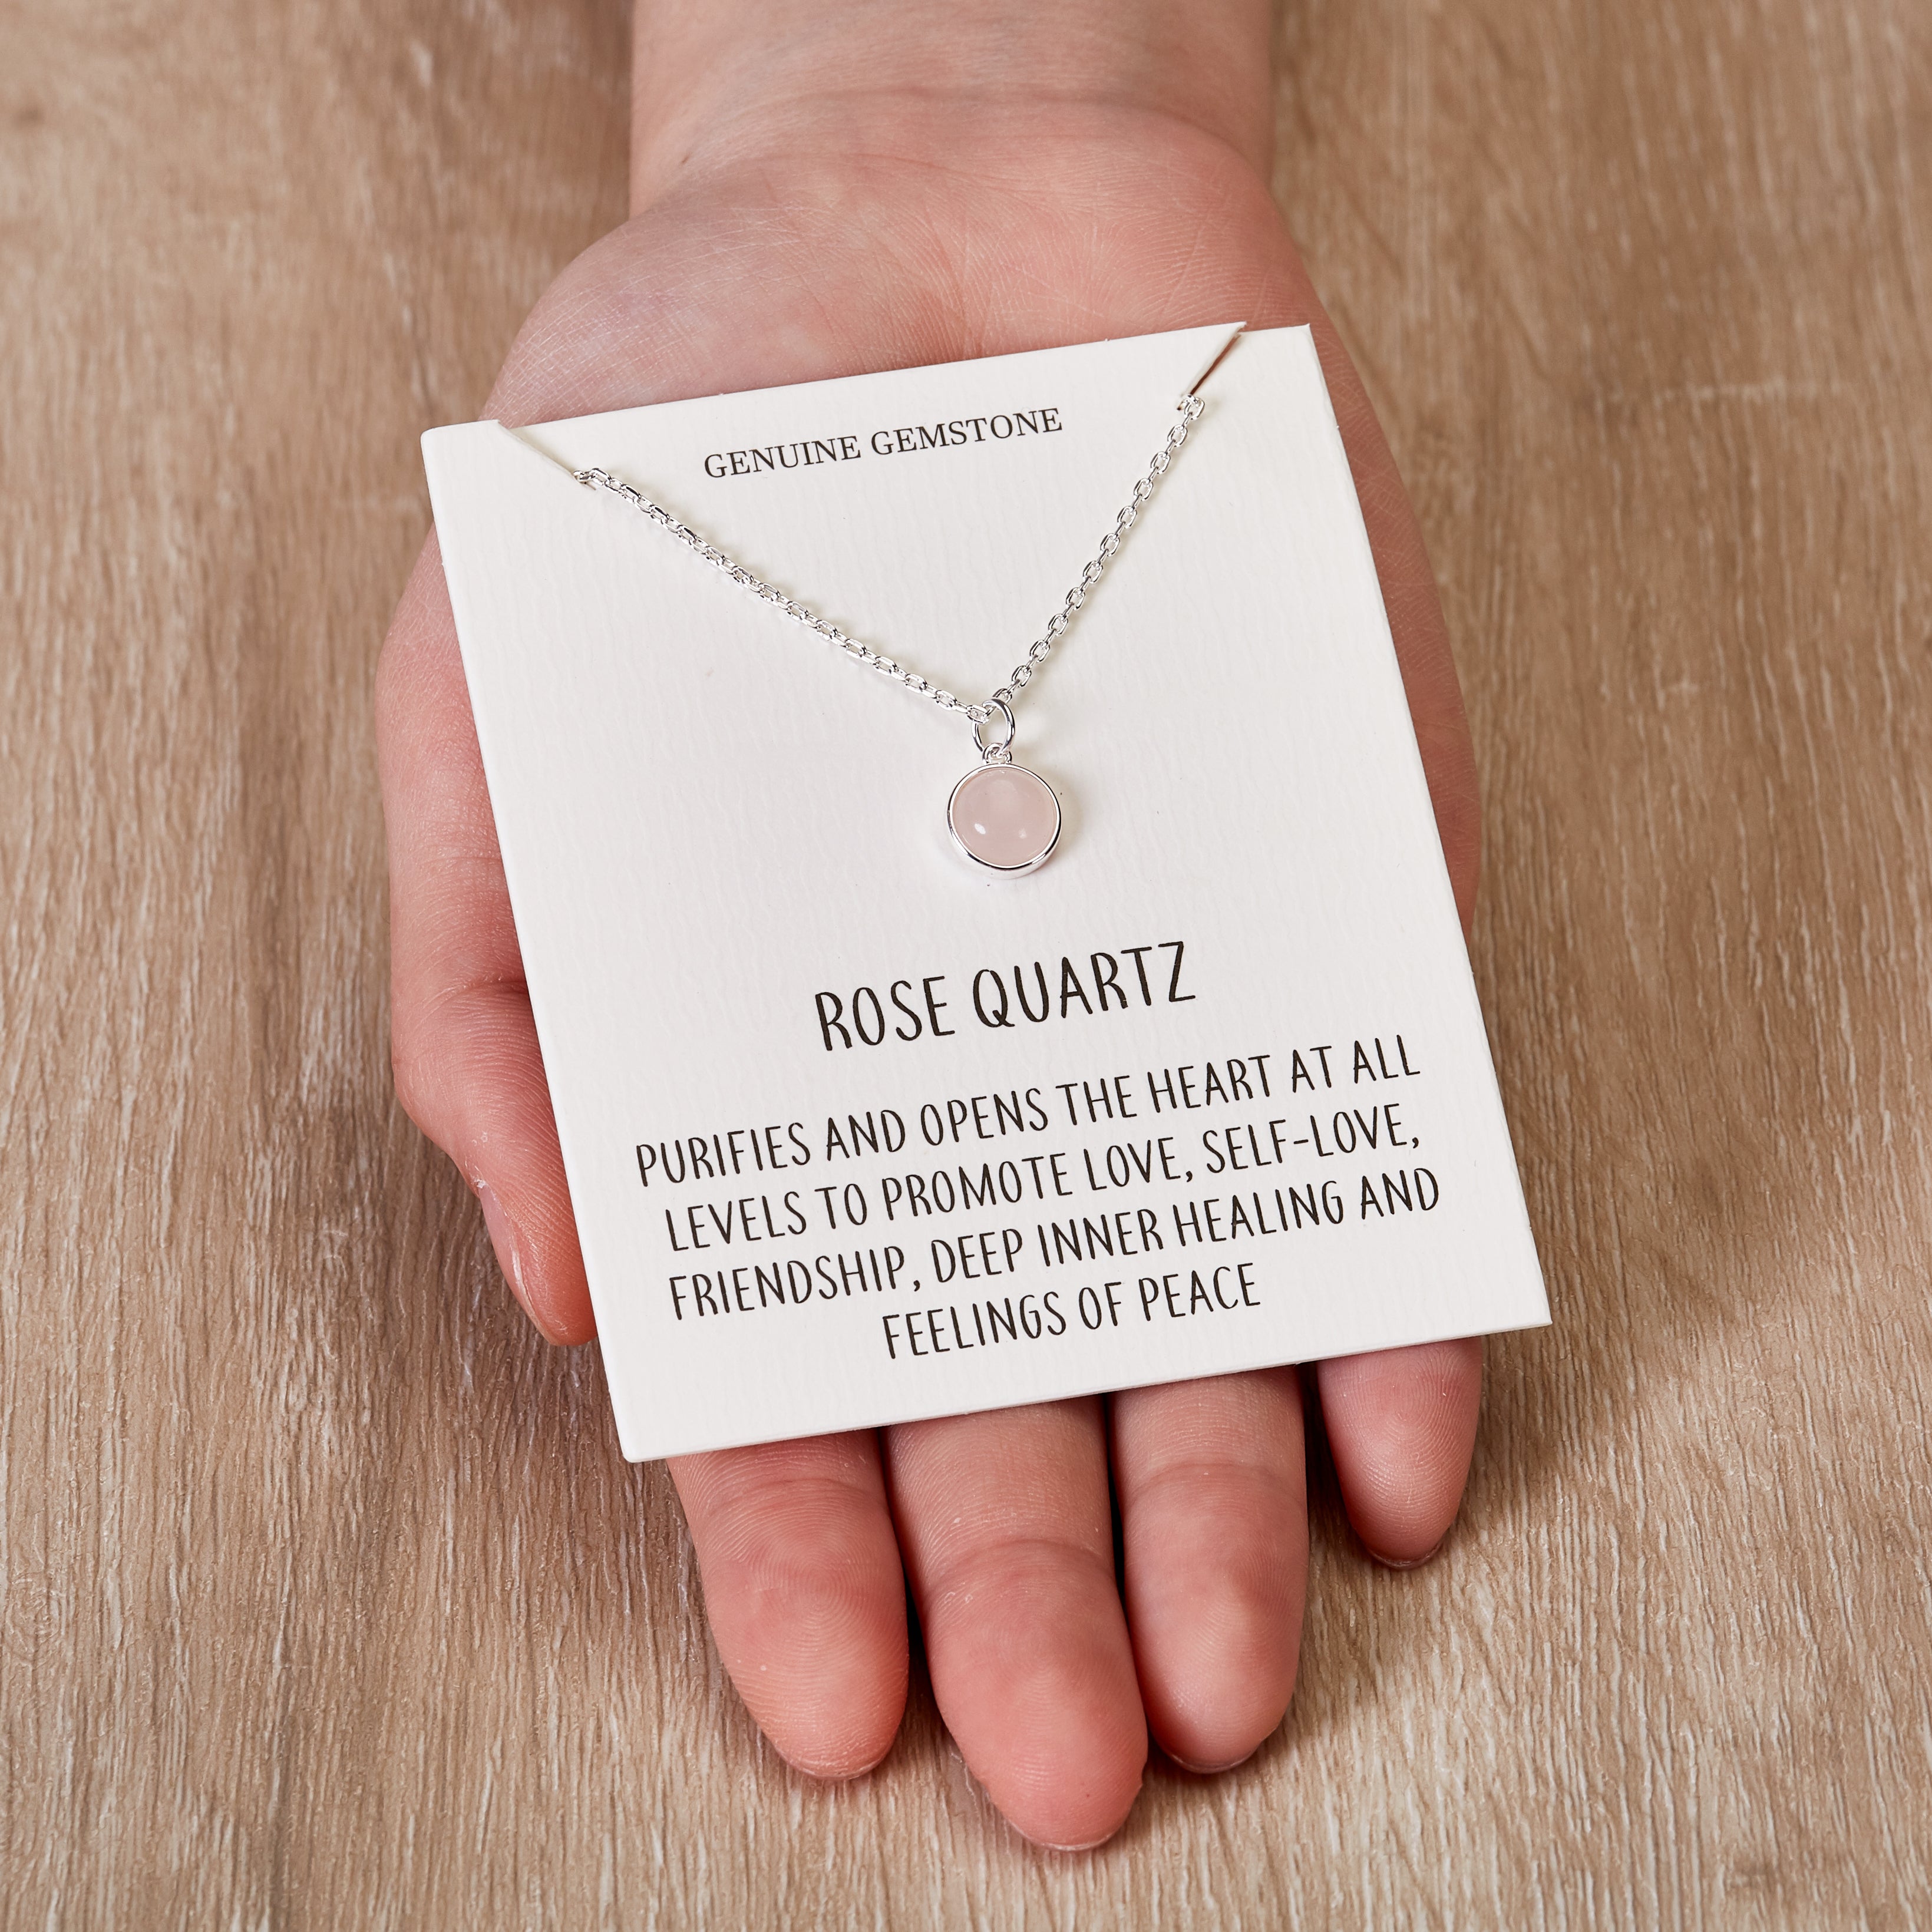 Rose Quartz Necklace with Quote Card